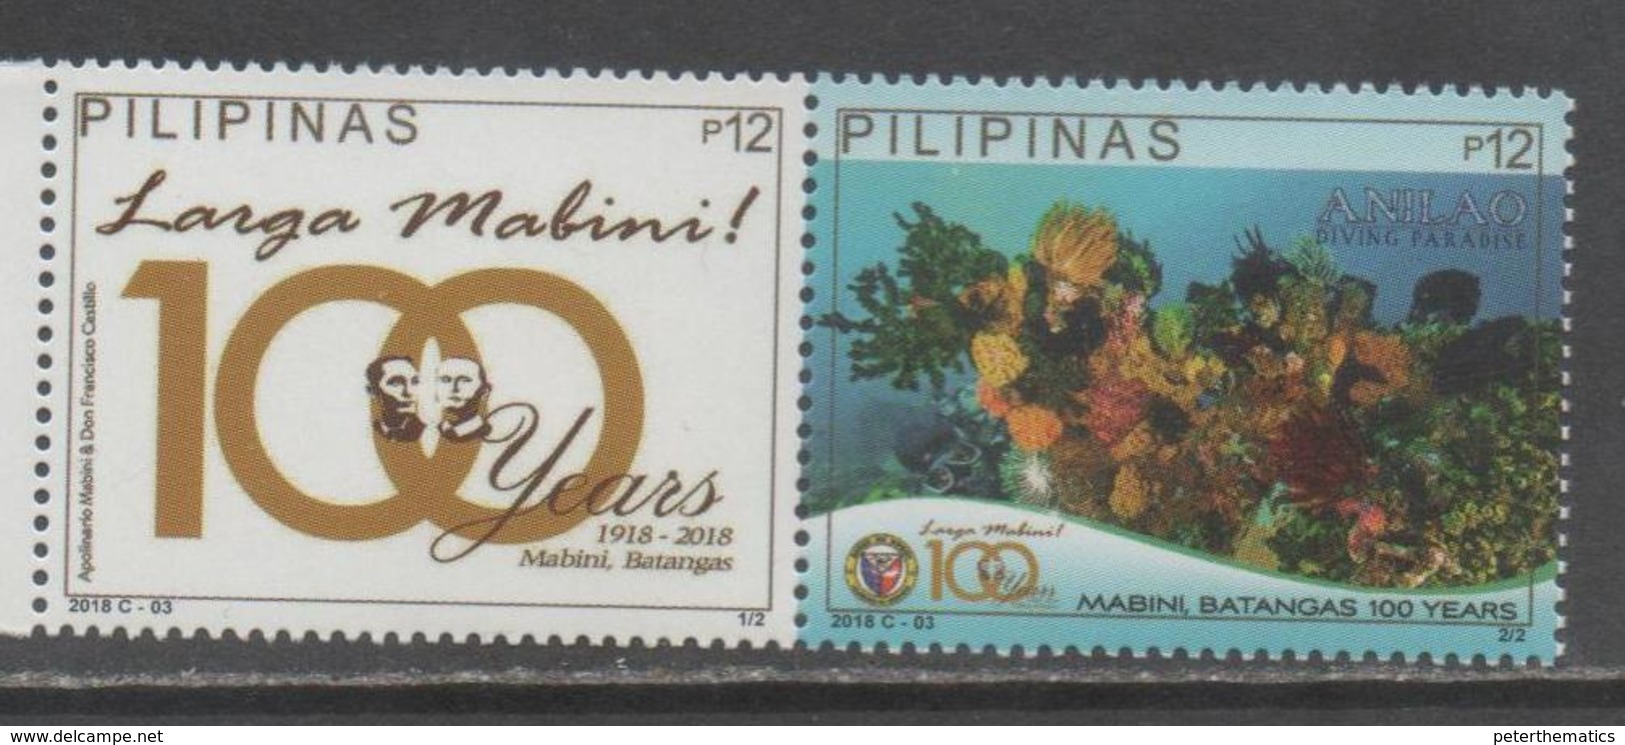 PHILIPPINES, 2018, MNH, LARGO MABINI, CORALS, DIVING,2v - Marine Life